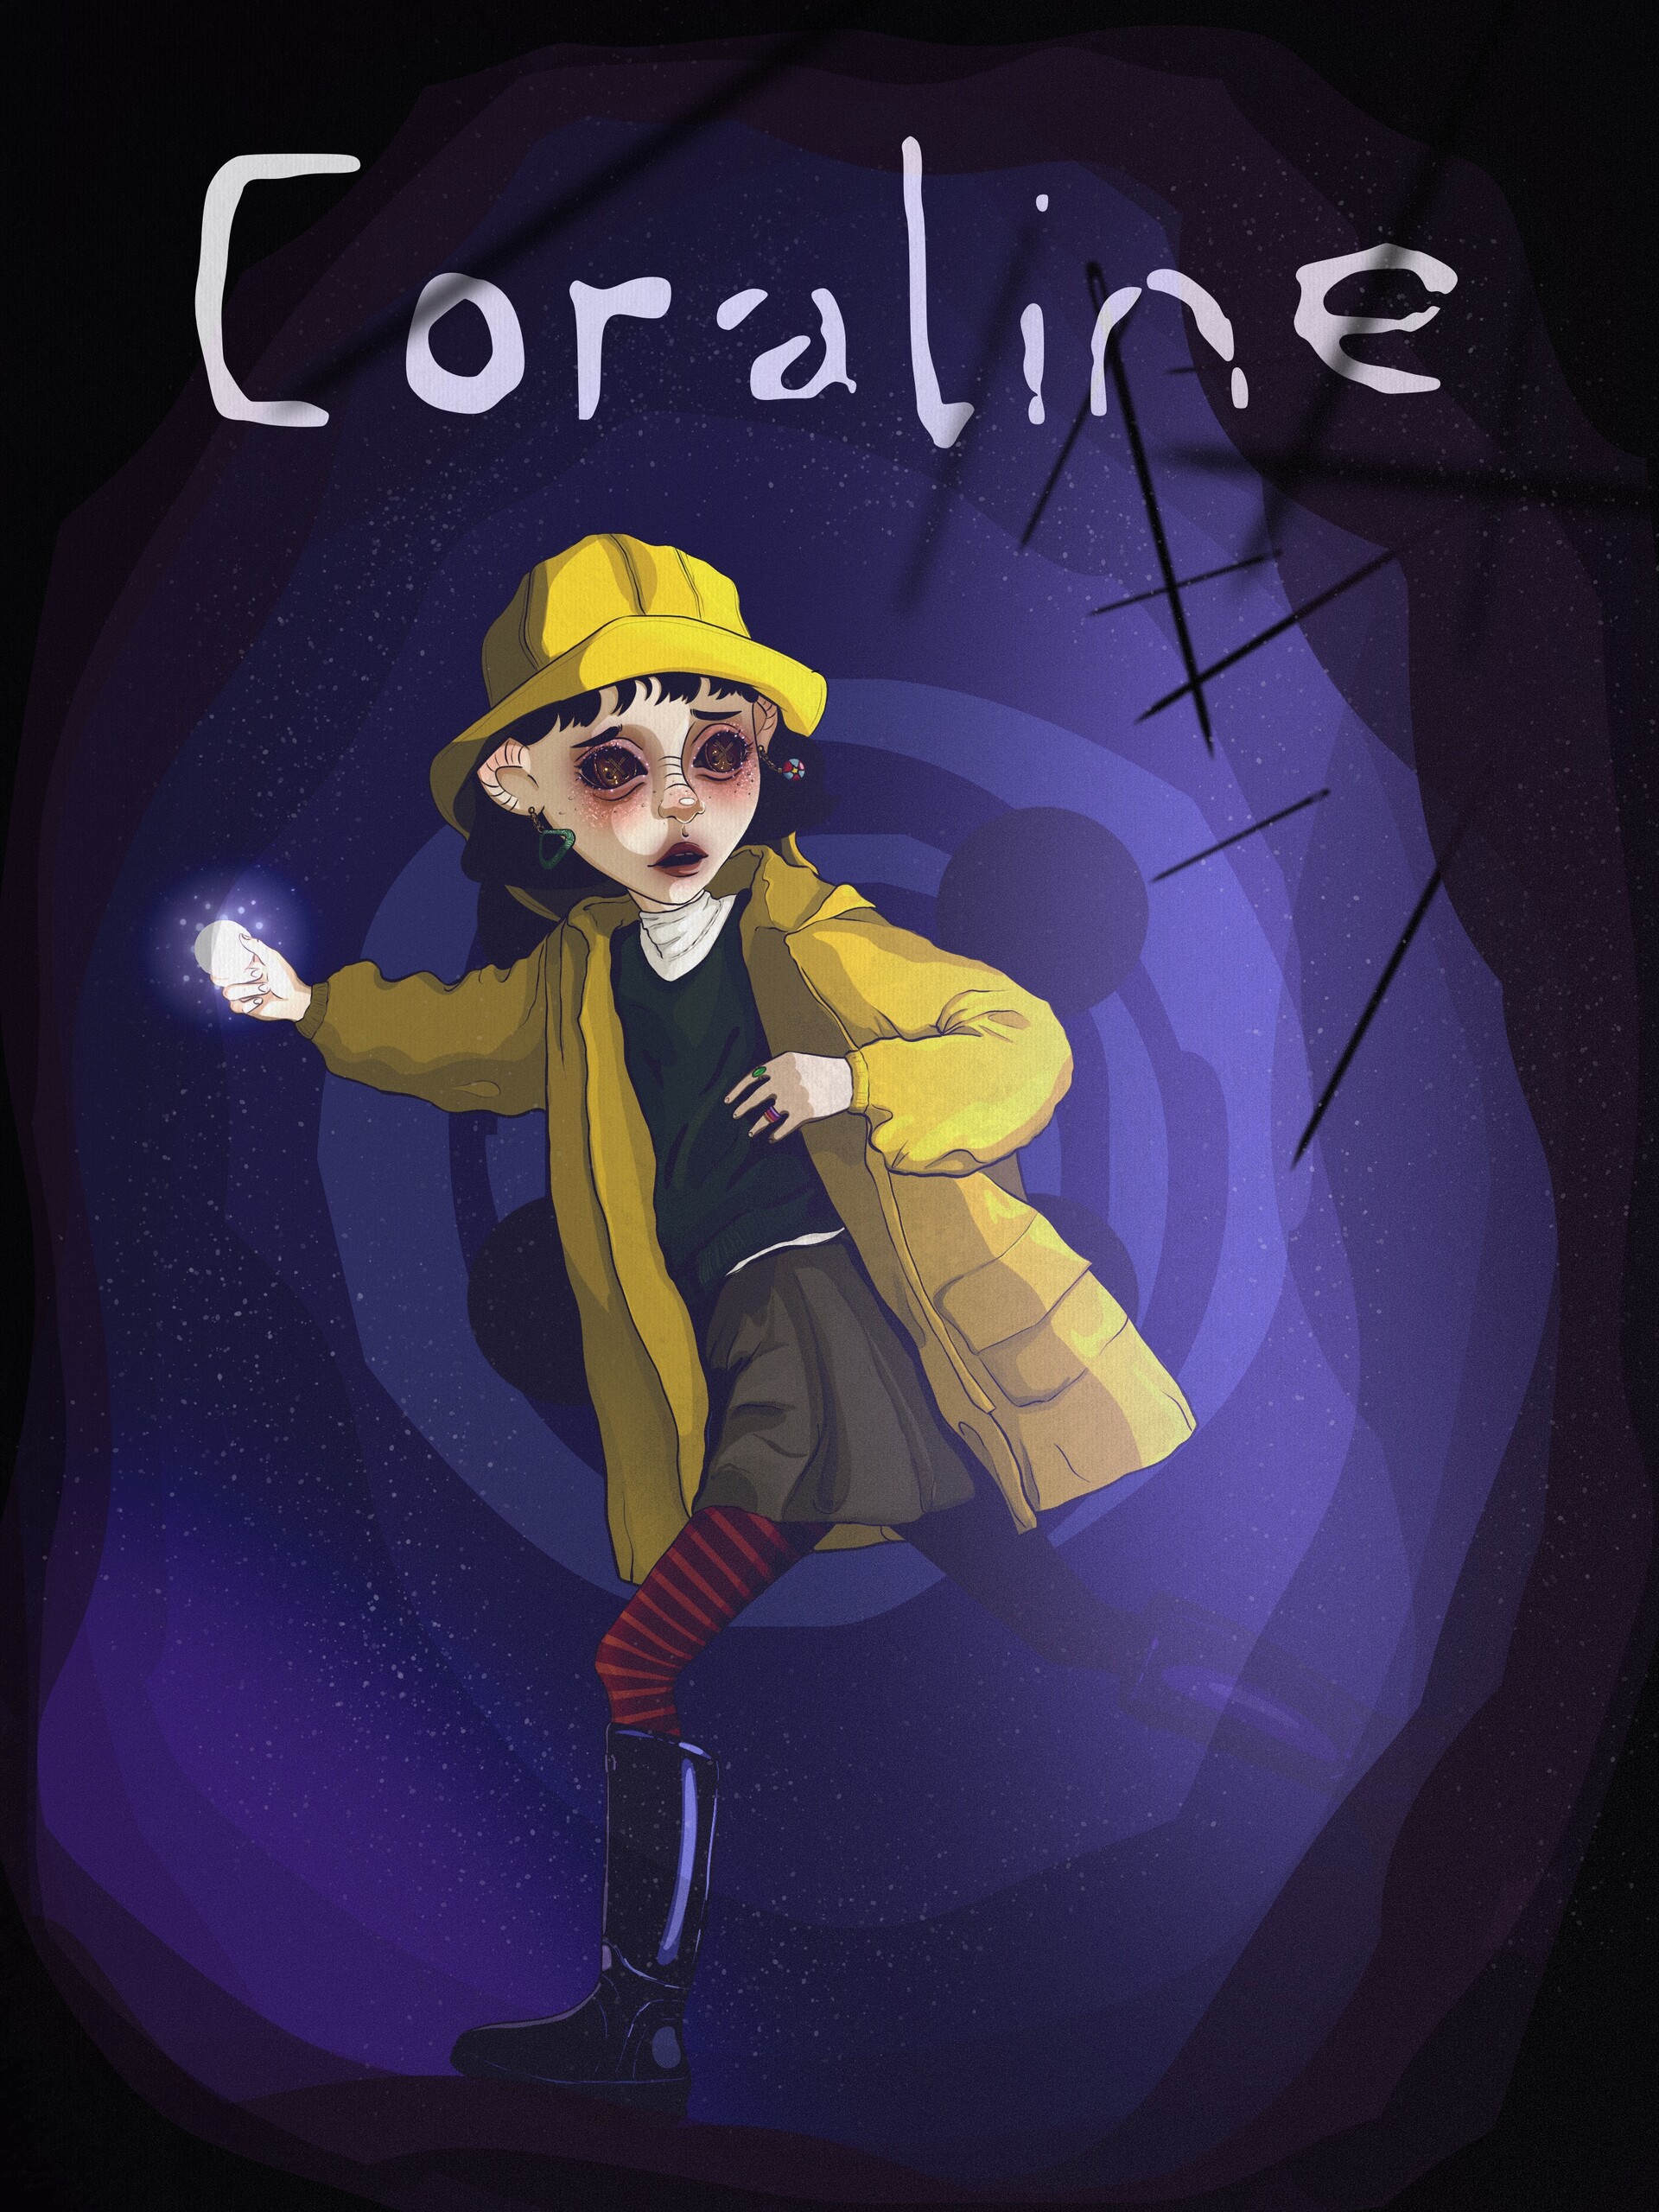 ArtStation - Coraline illustrated poster